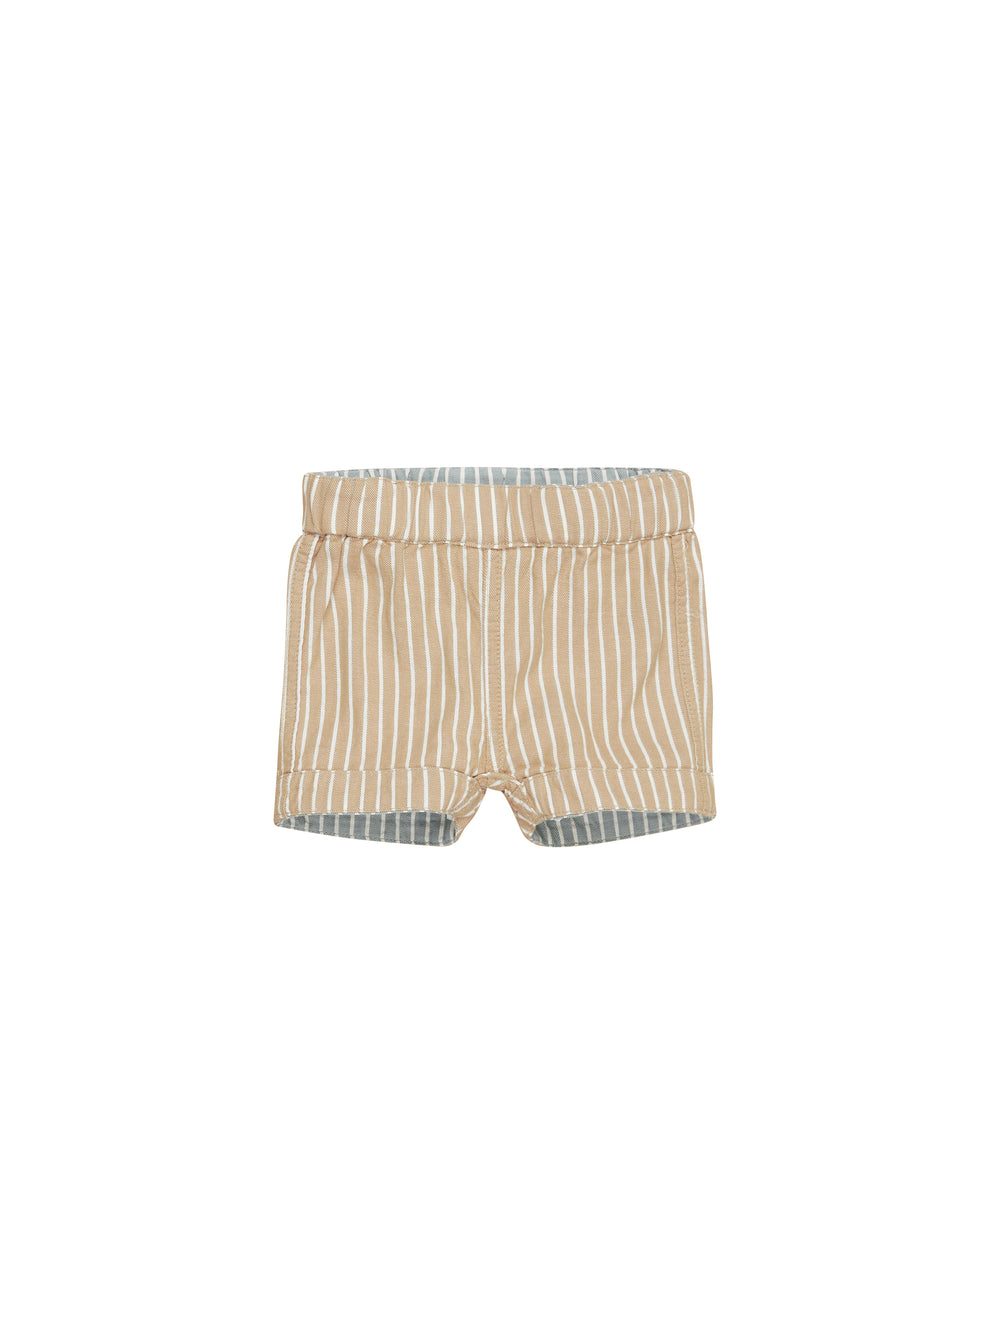 Stripe Reversible Chino Shorts by Huxbaby